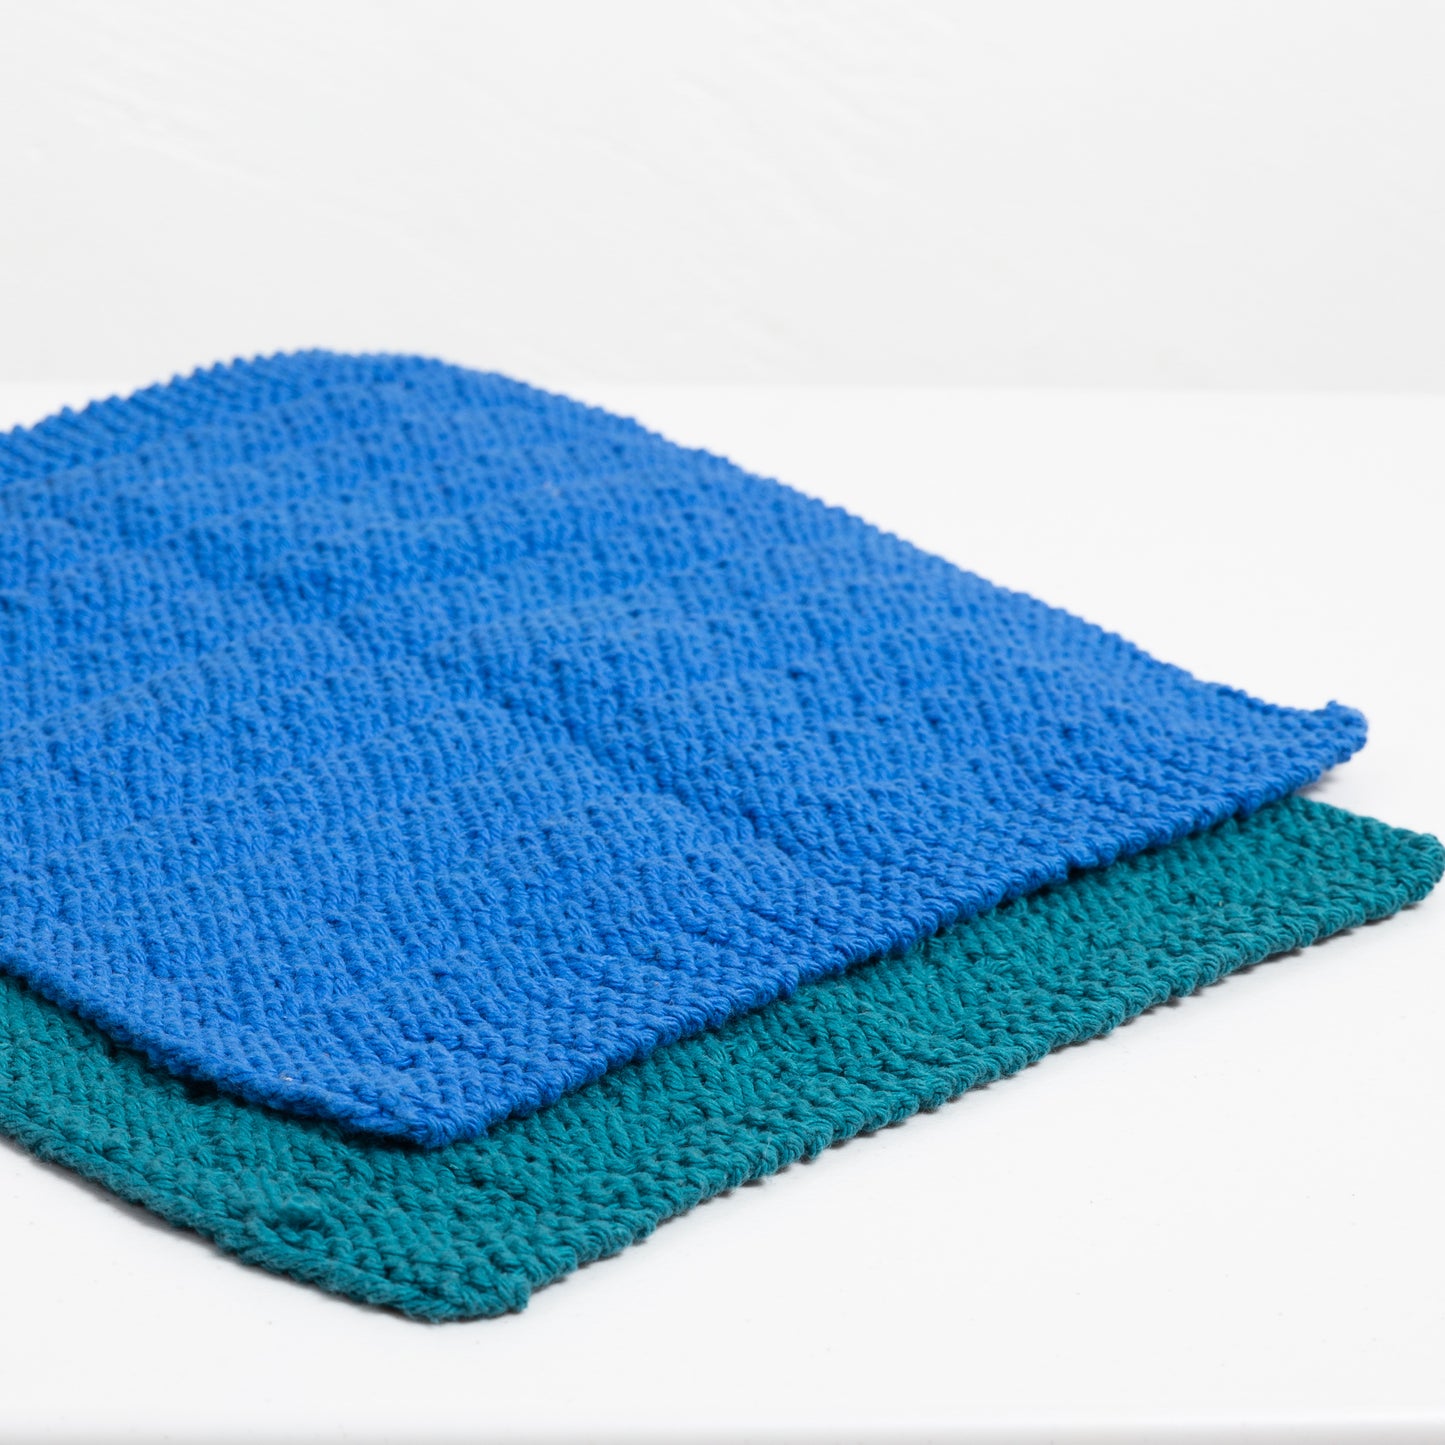 2 Towels (Teal & Blue)